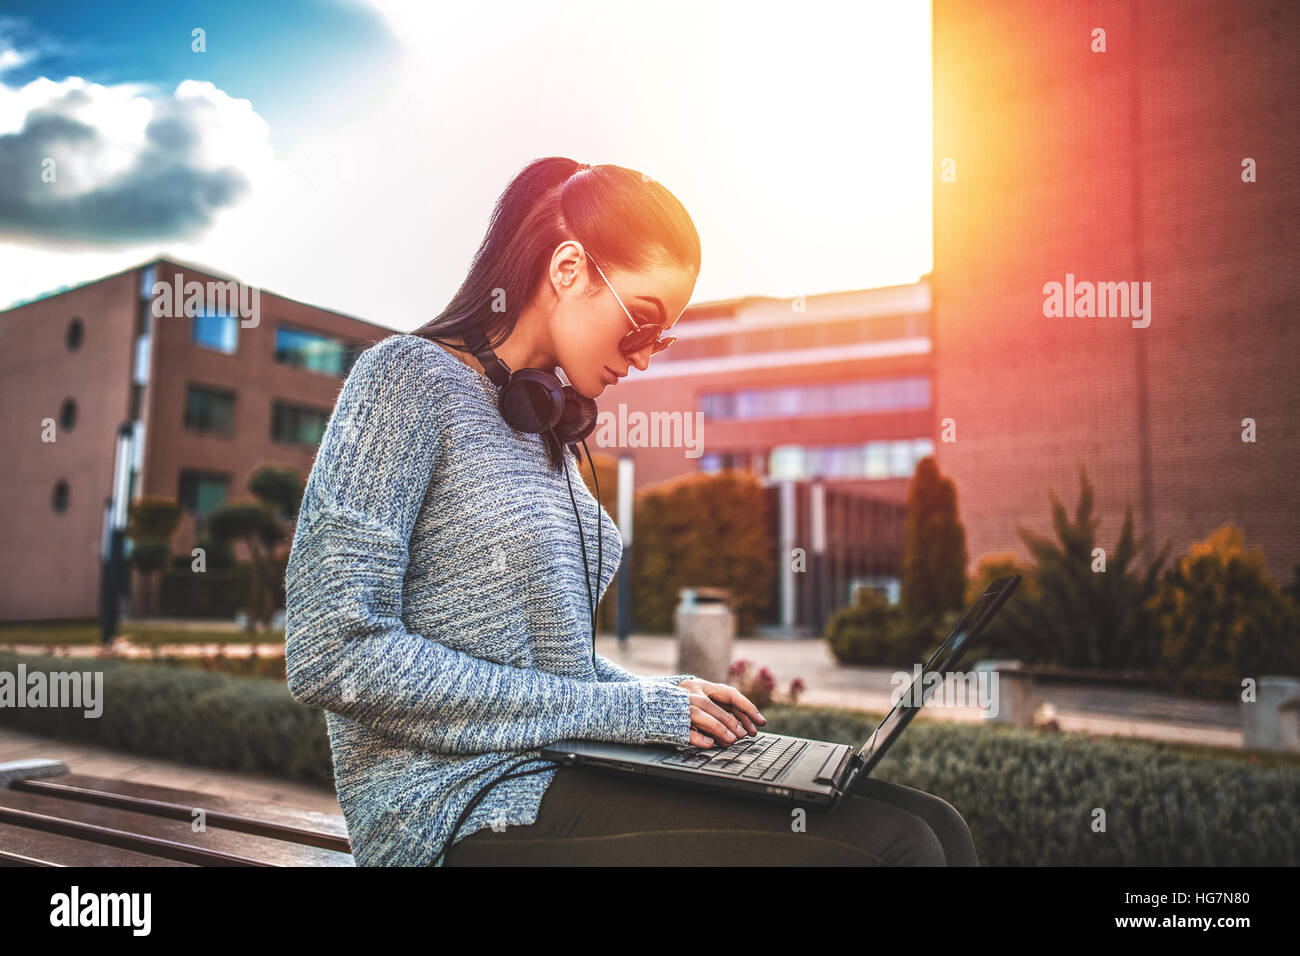 Junge Frau bei outdoor, farbenfrohen Sonnenuntergang auf Laptop tippen Stockfoto